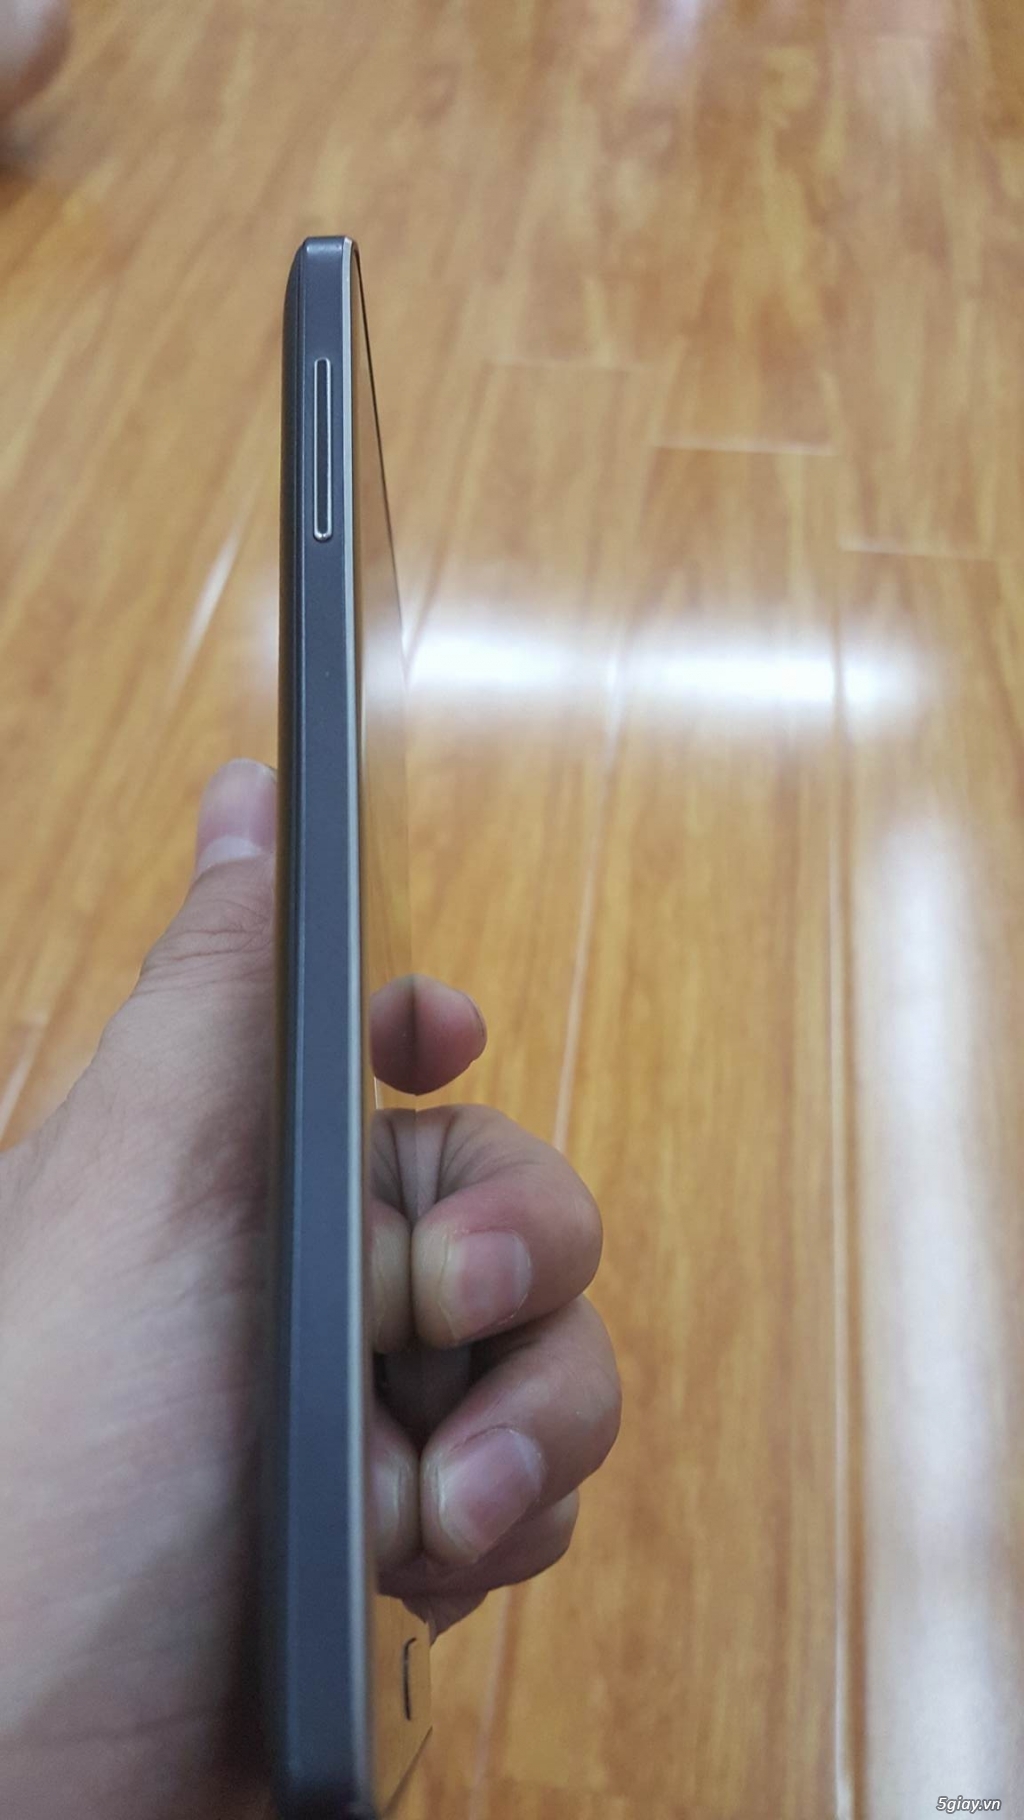 Samsung note edge - 1